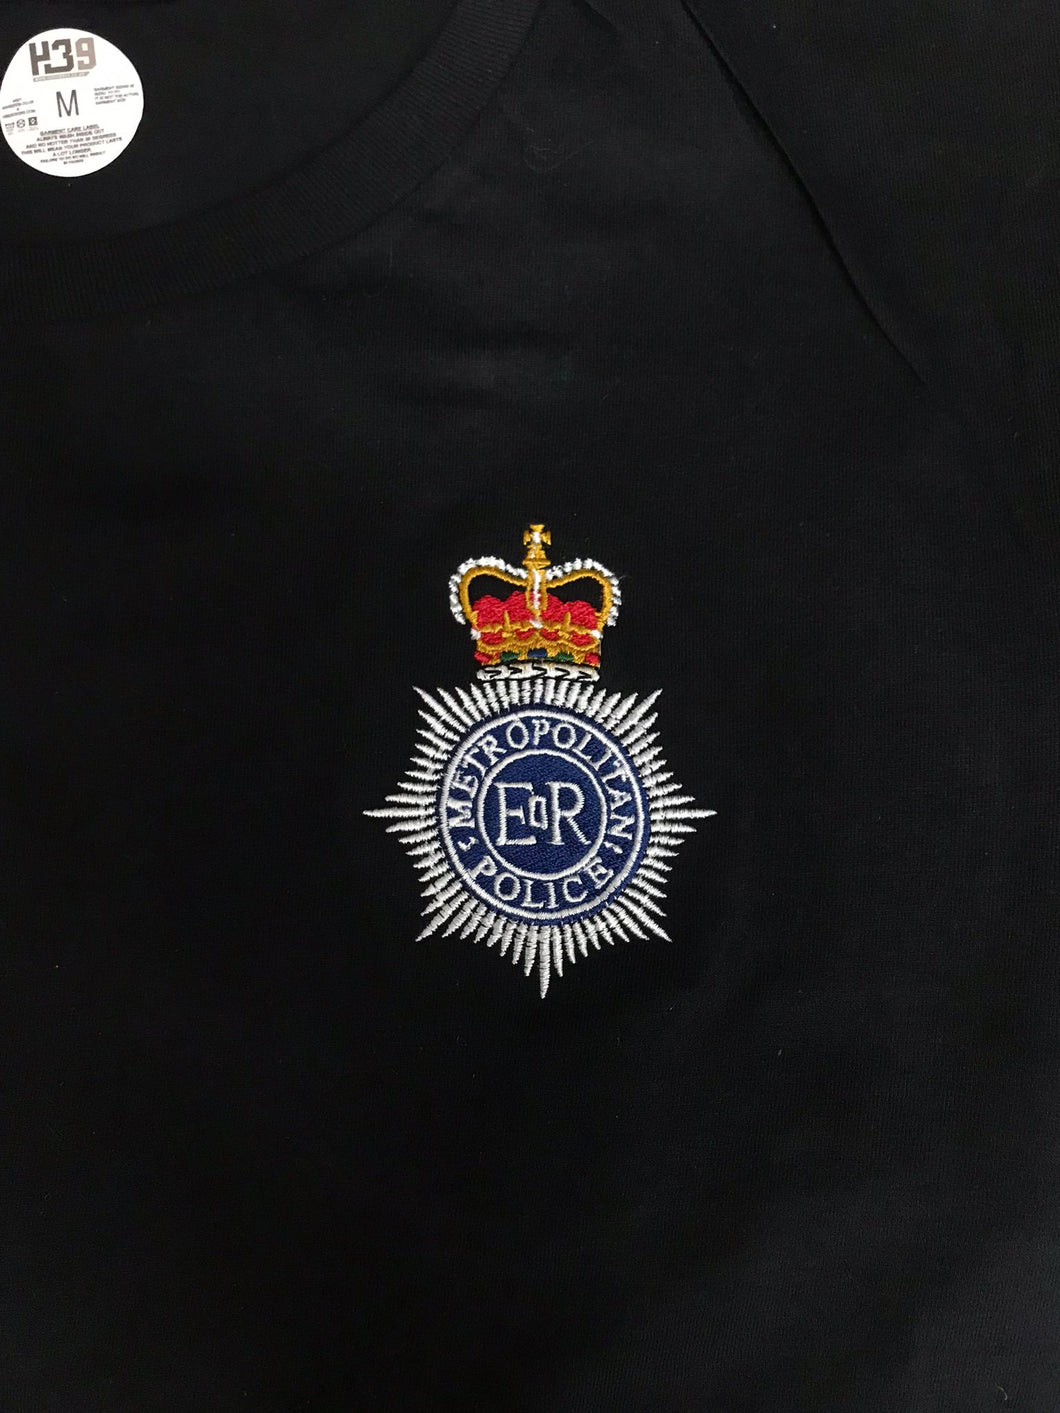 EIIR Metropolitan Police - Embroidered Design - Choose your Garment